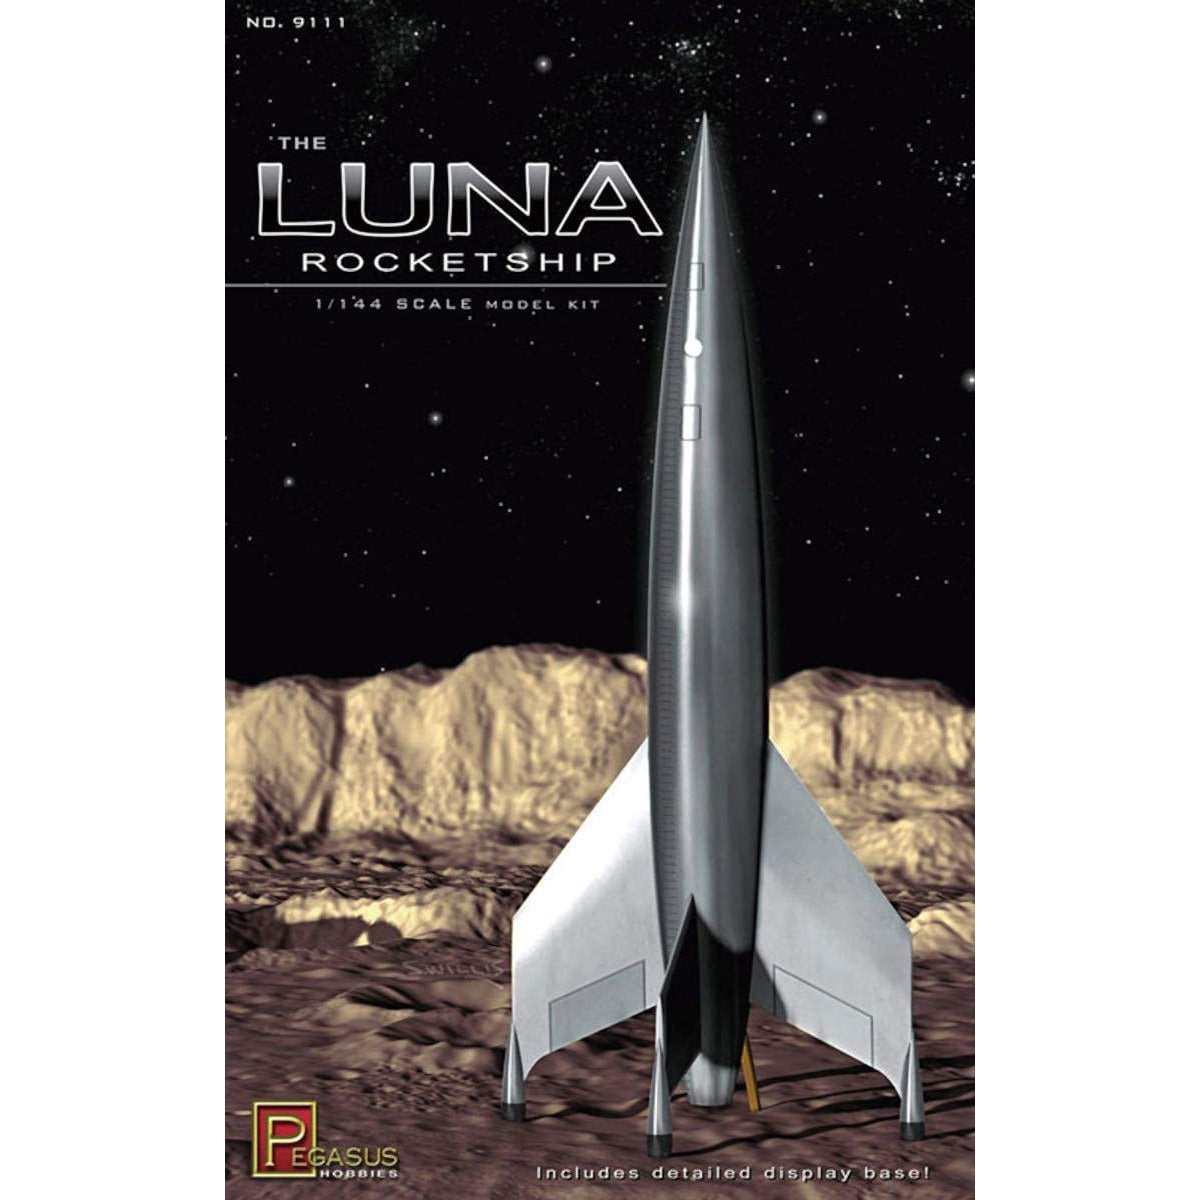 Luna Rocketship 1/144 Science Fiction Model Kit #9111 by Pegasus Hobbies